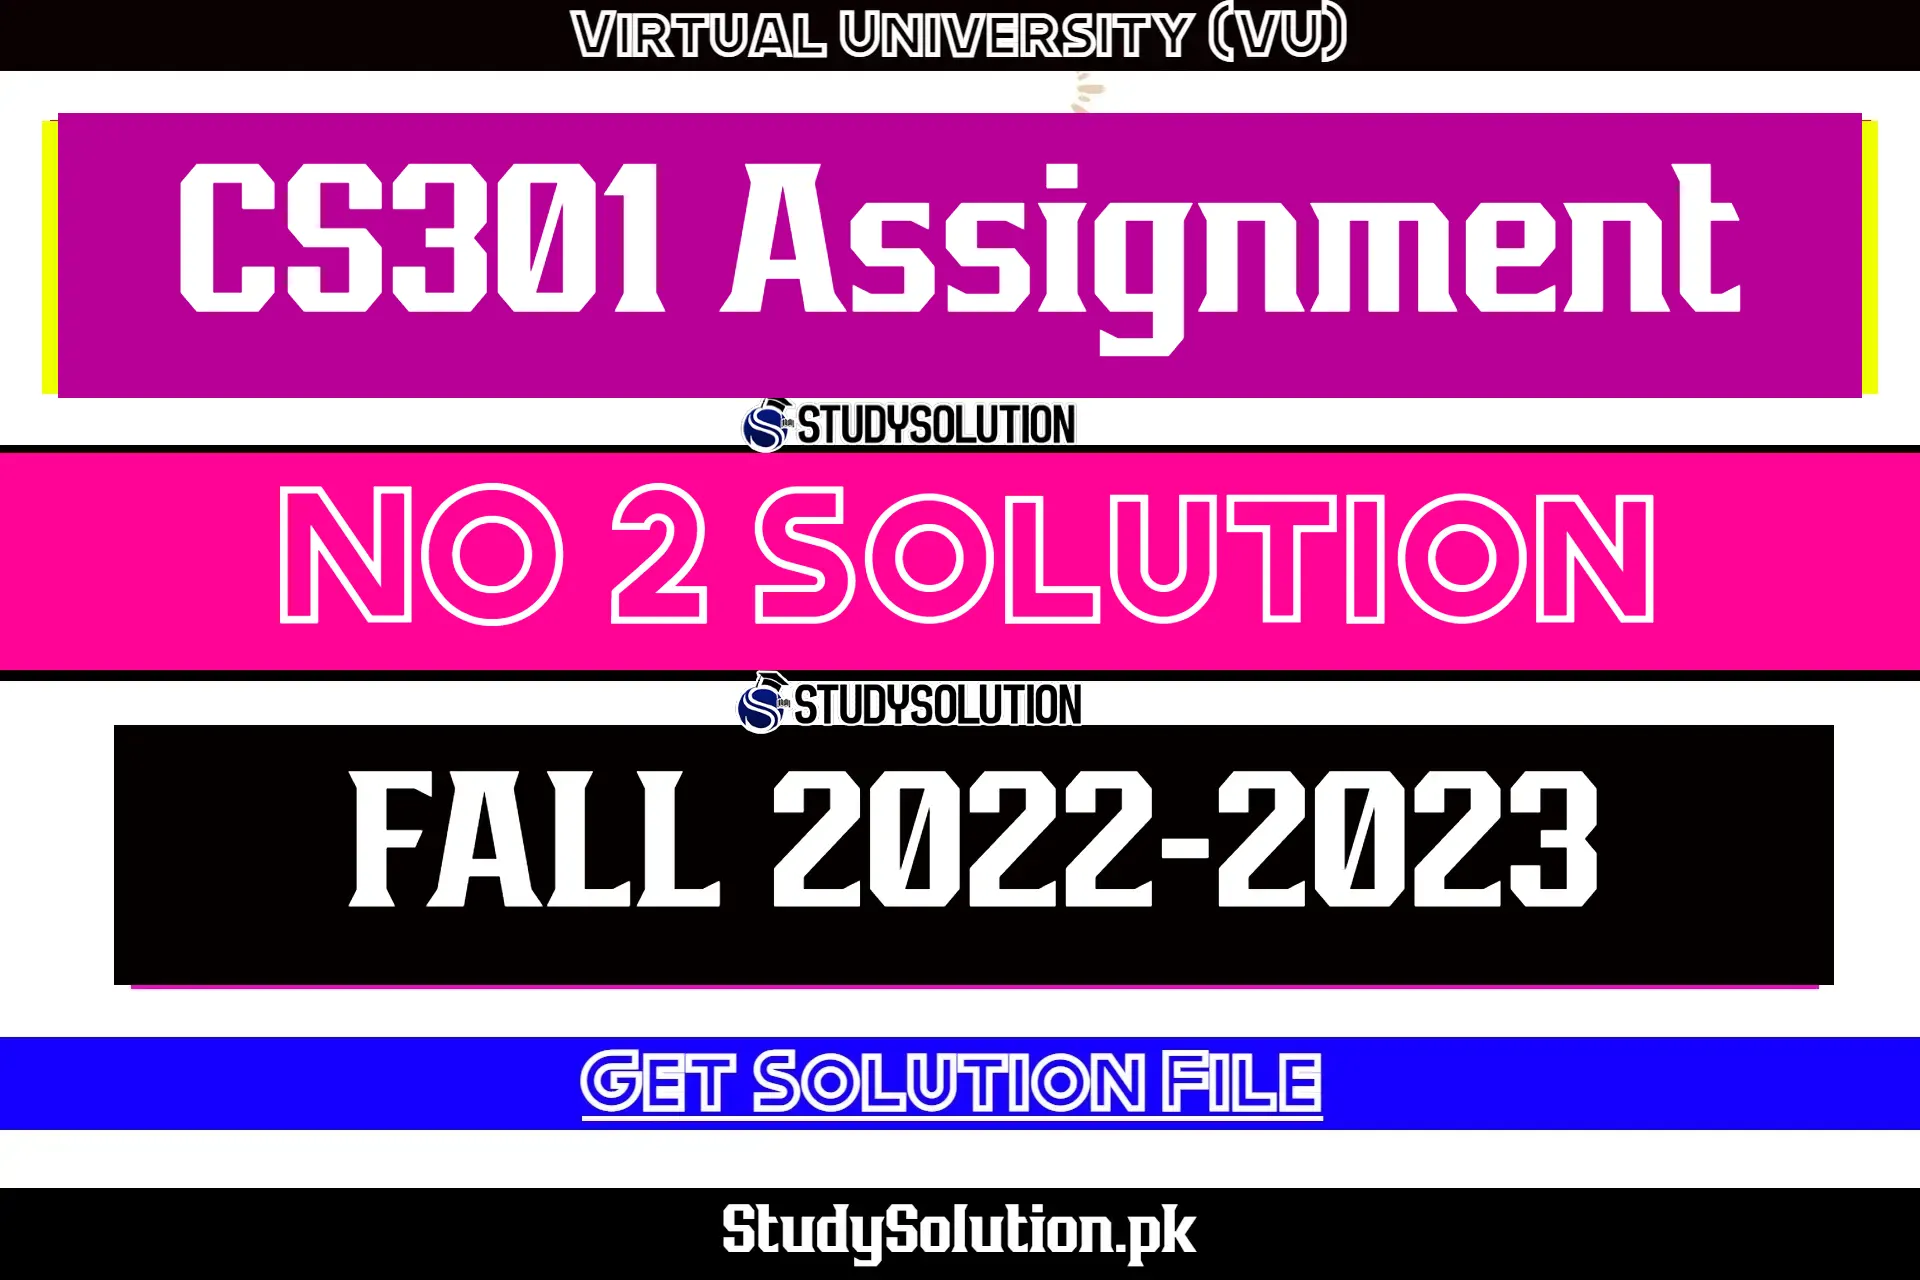 CS301 Assignment No 2 Solution Fall 2022